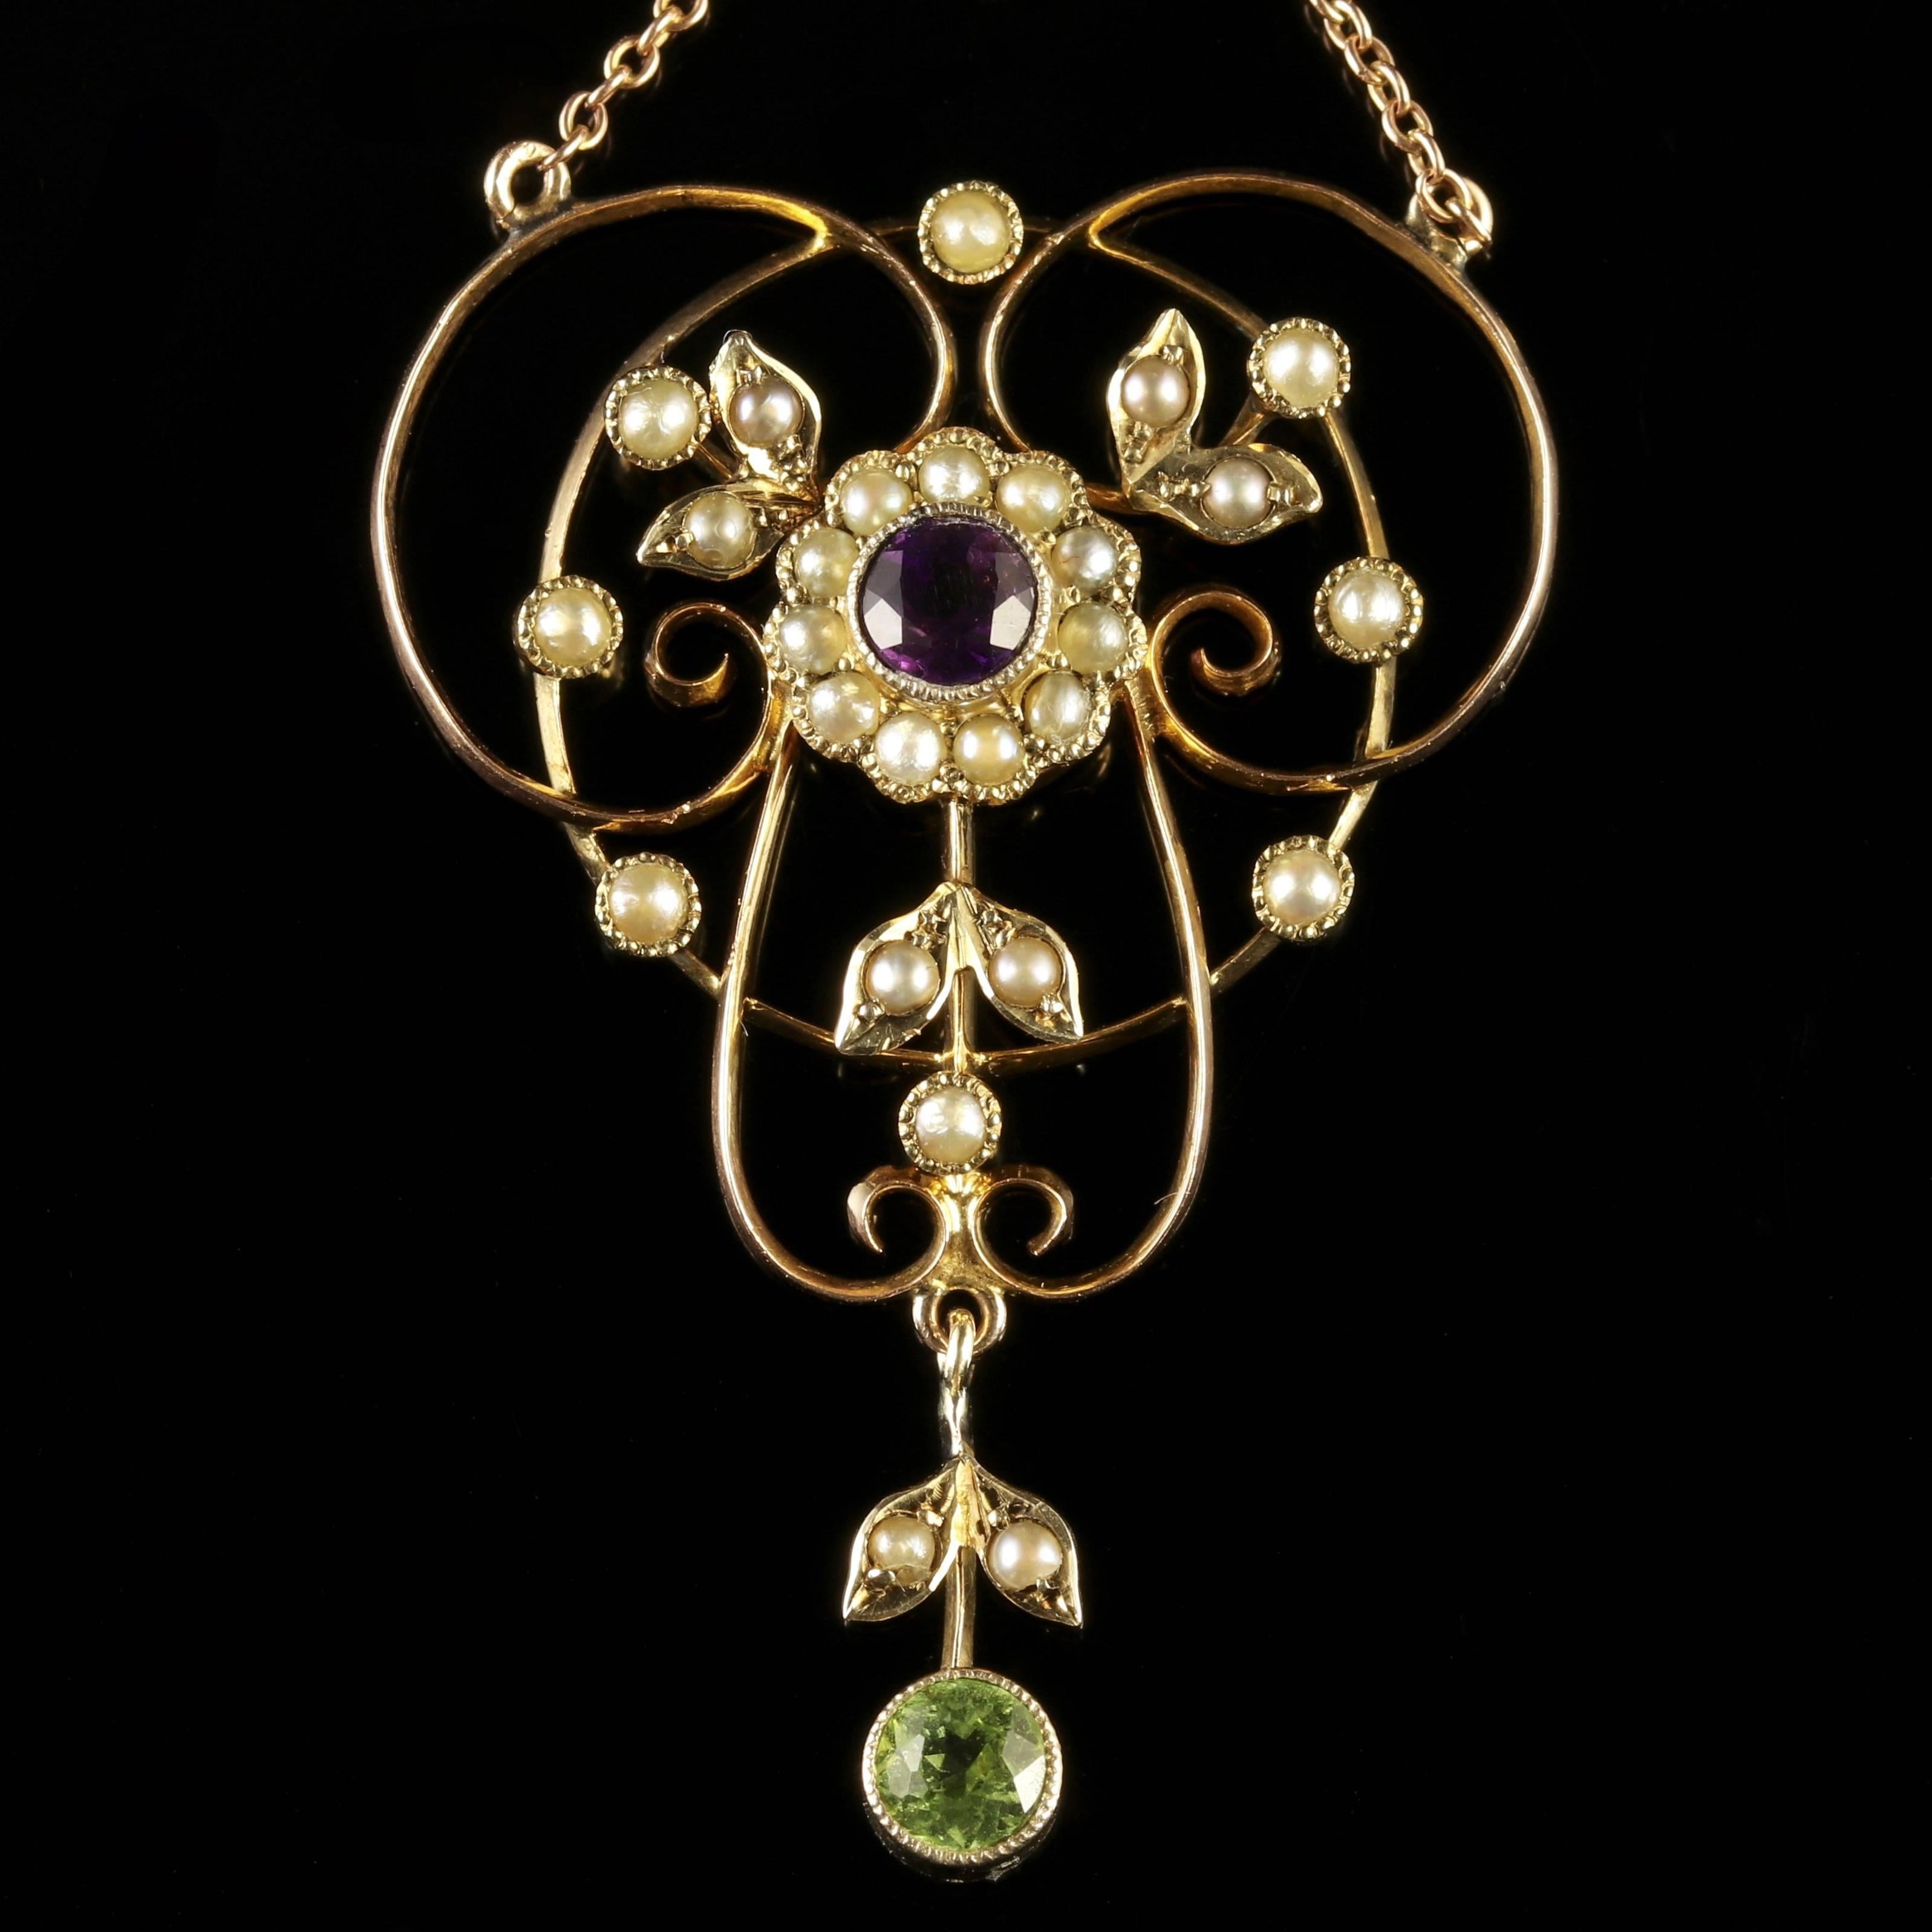 suffragette necklace